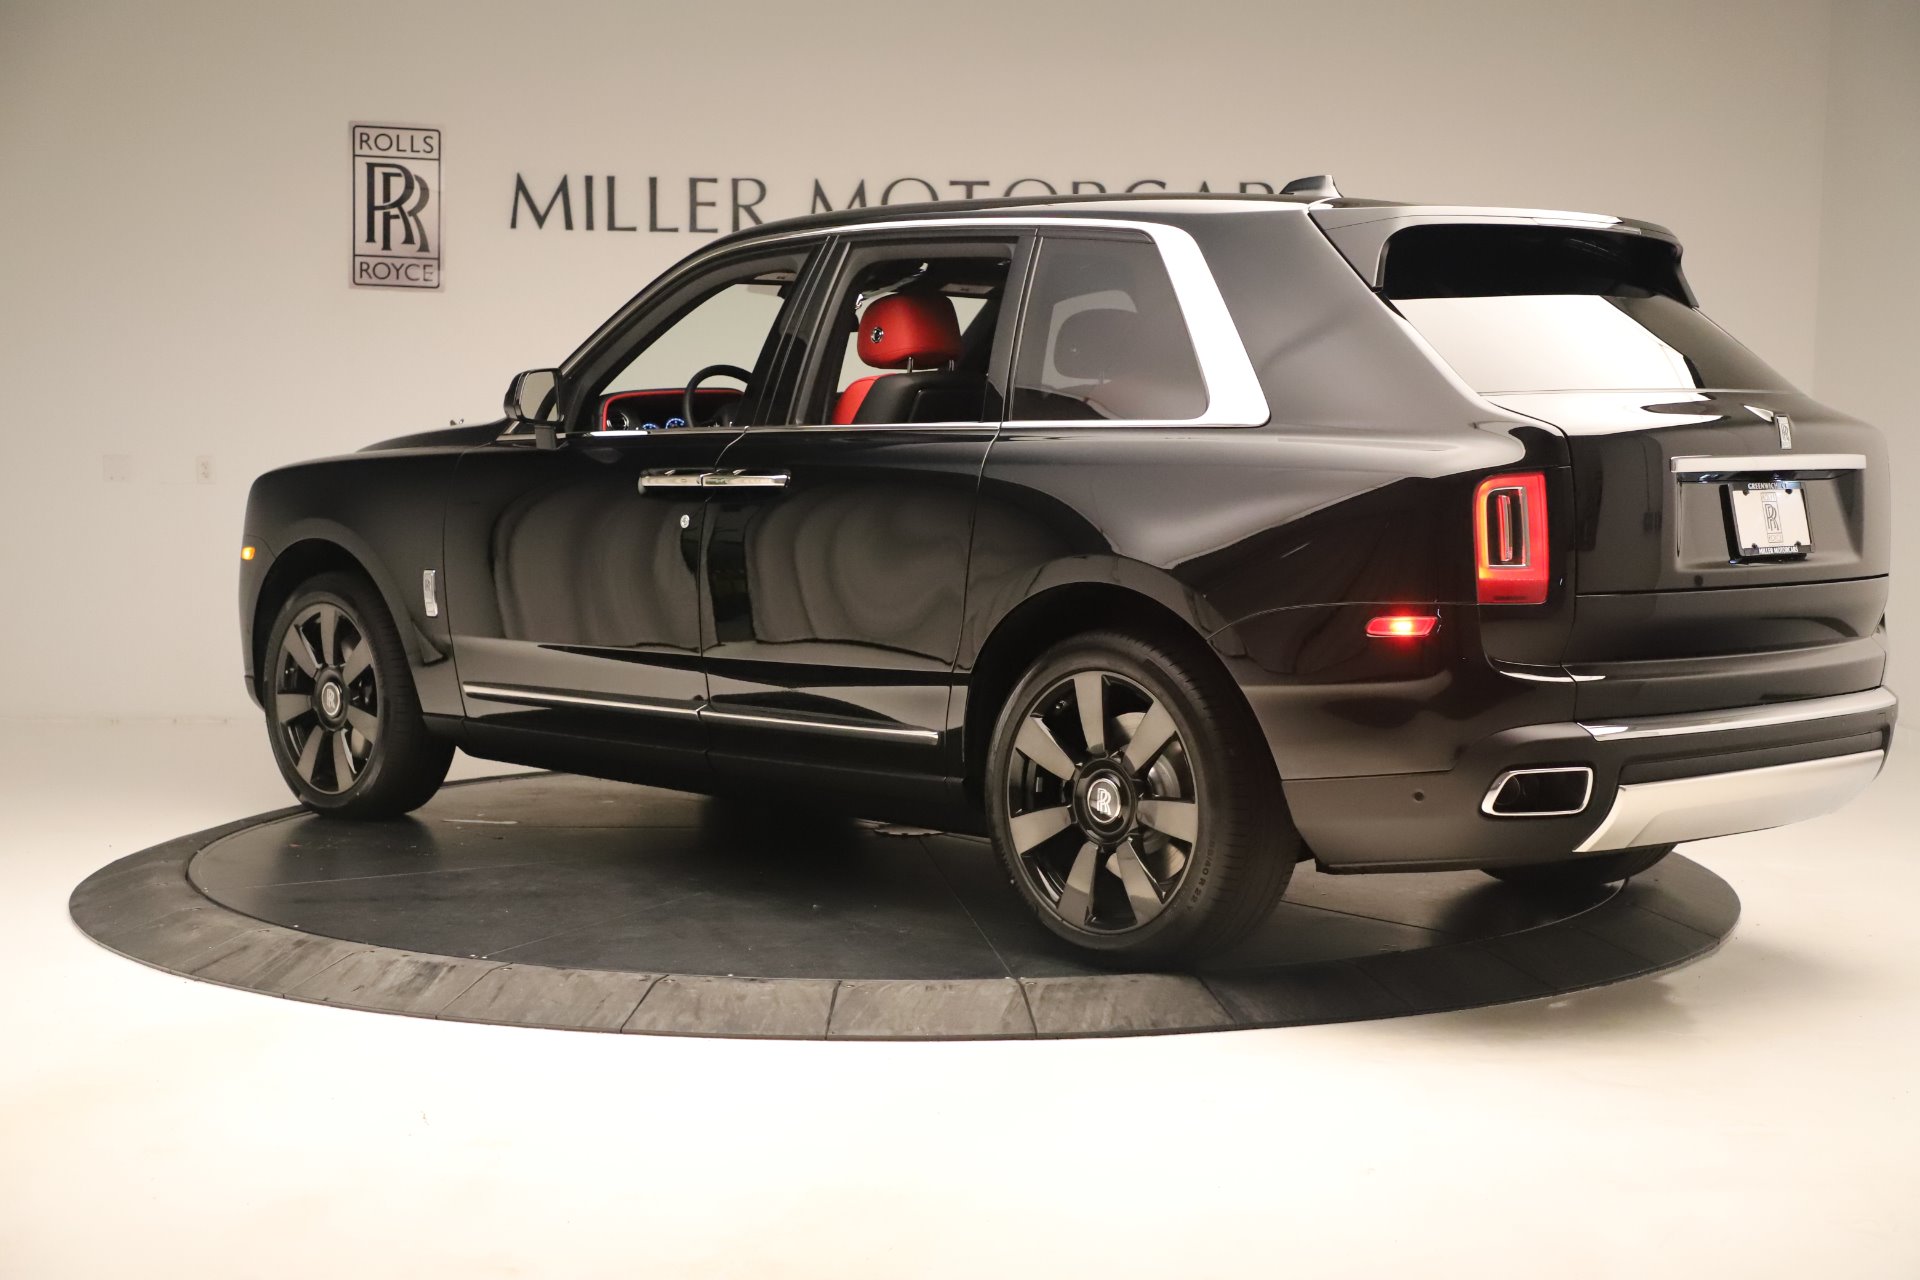 New-2020-Rolls-Royce-Cullinan